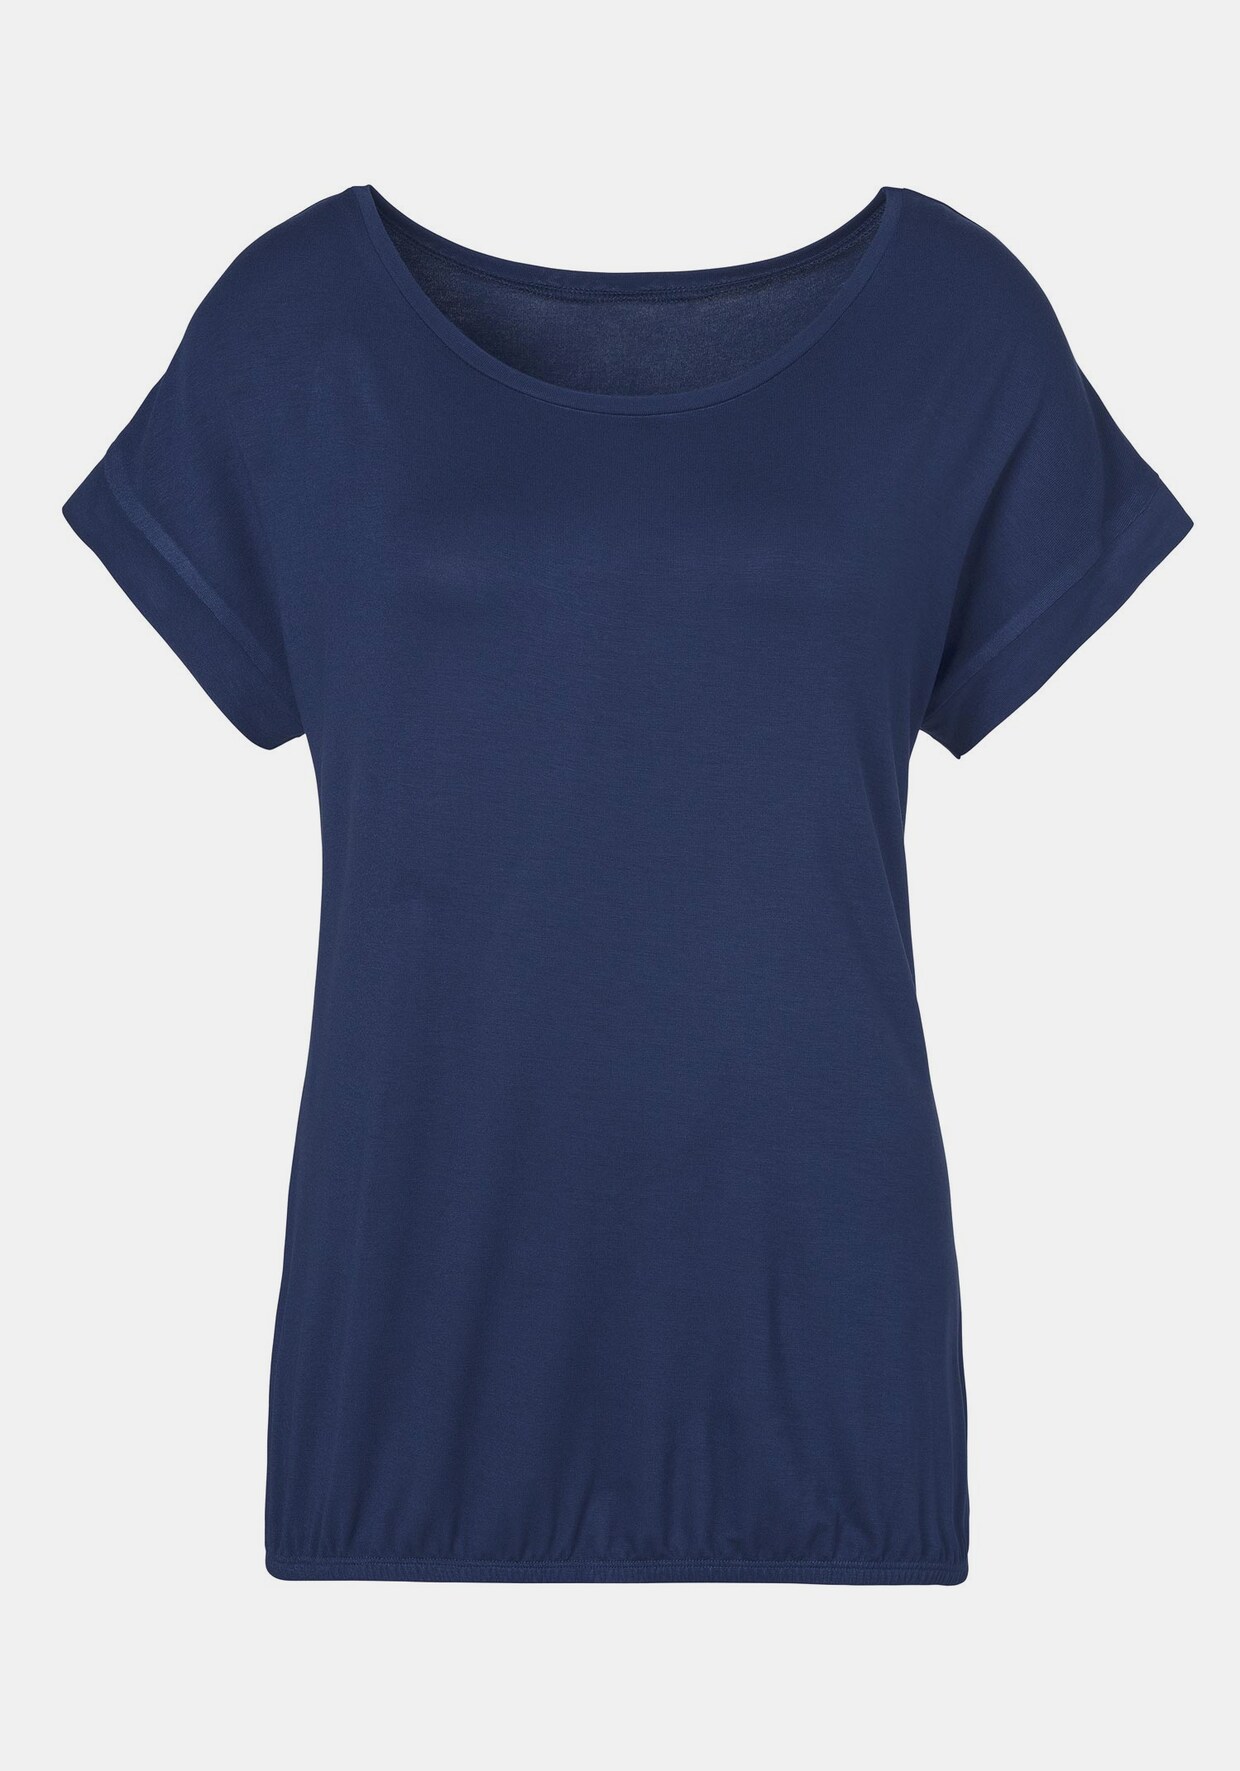 Vivance T-Shirt - 1x koralle + 1x navy